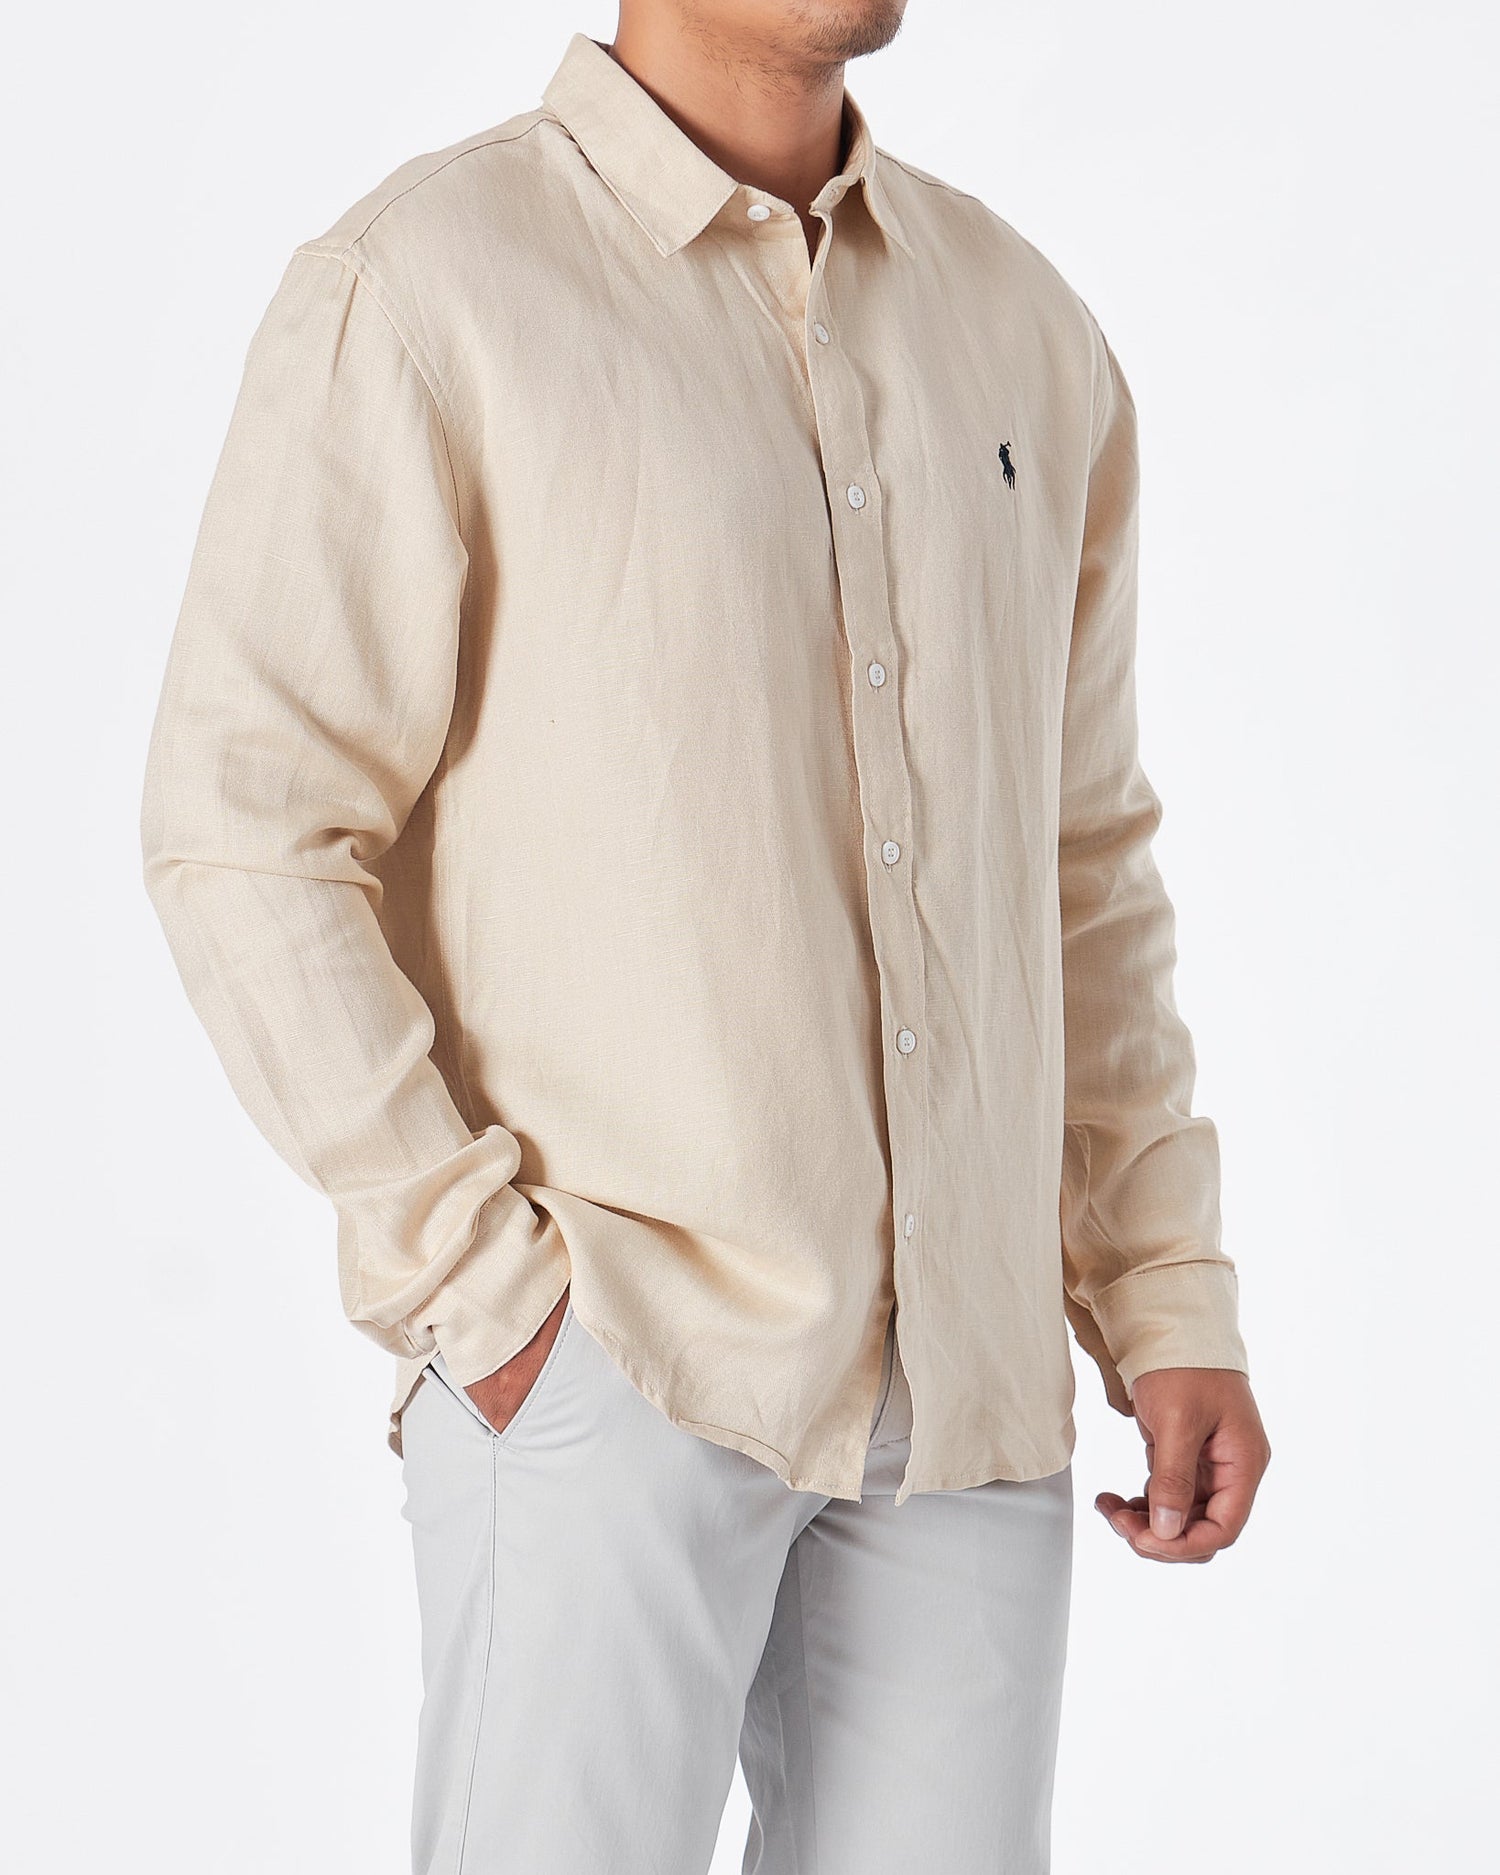 MOI OUTFIT-RL Cotton Men Cream Shirts Long Sleeve 30.90